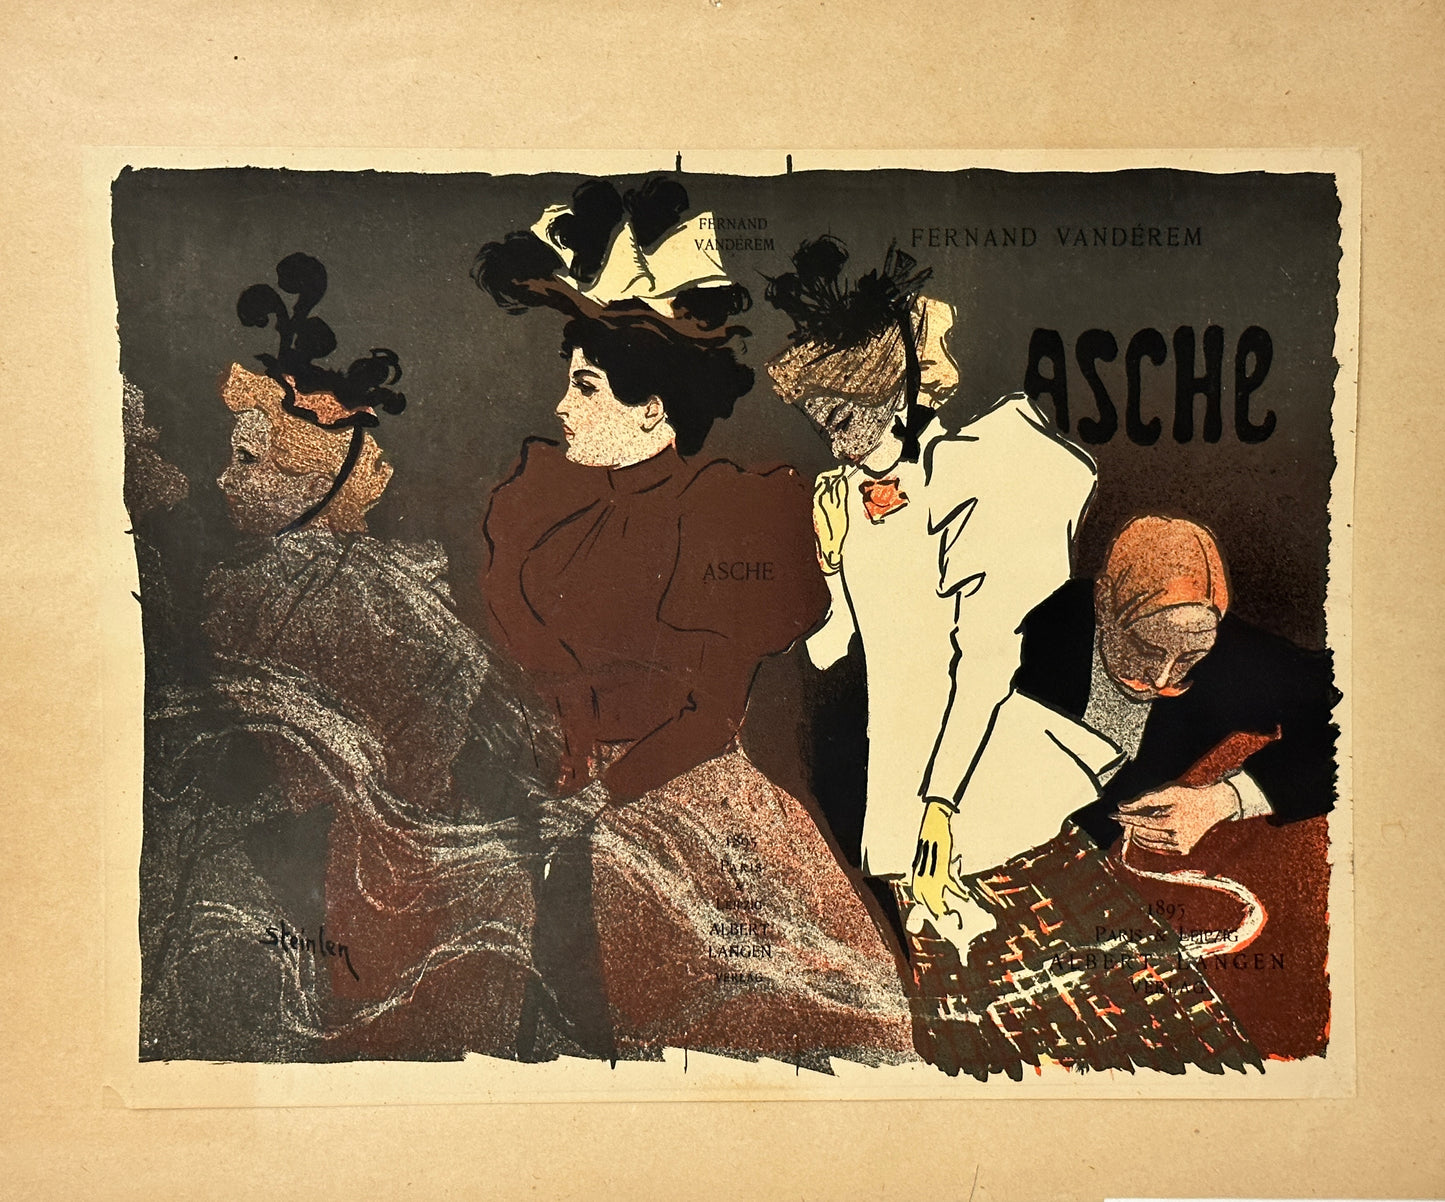 Theophile Alexandre Steinlen Asche Lithograph: "Asche" Cover for book by Fernand Vanderem